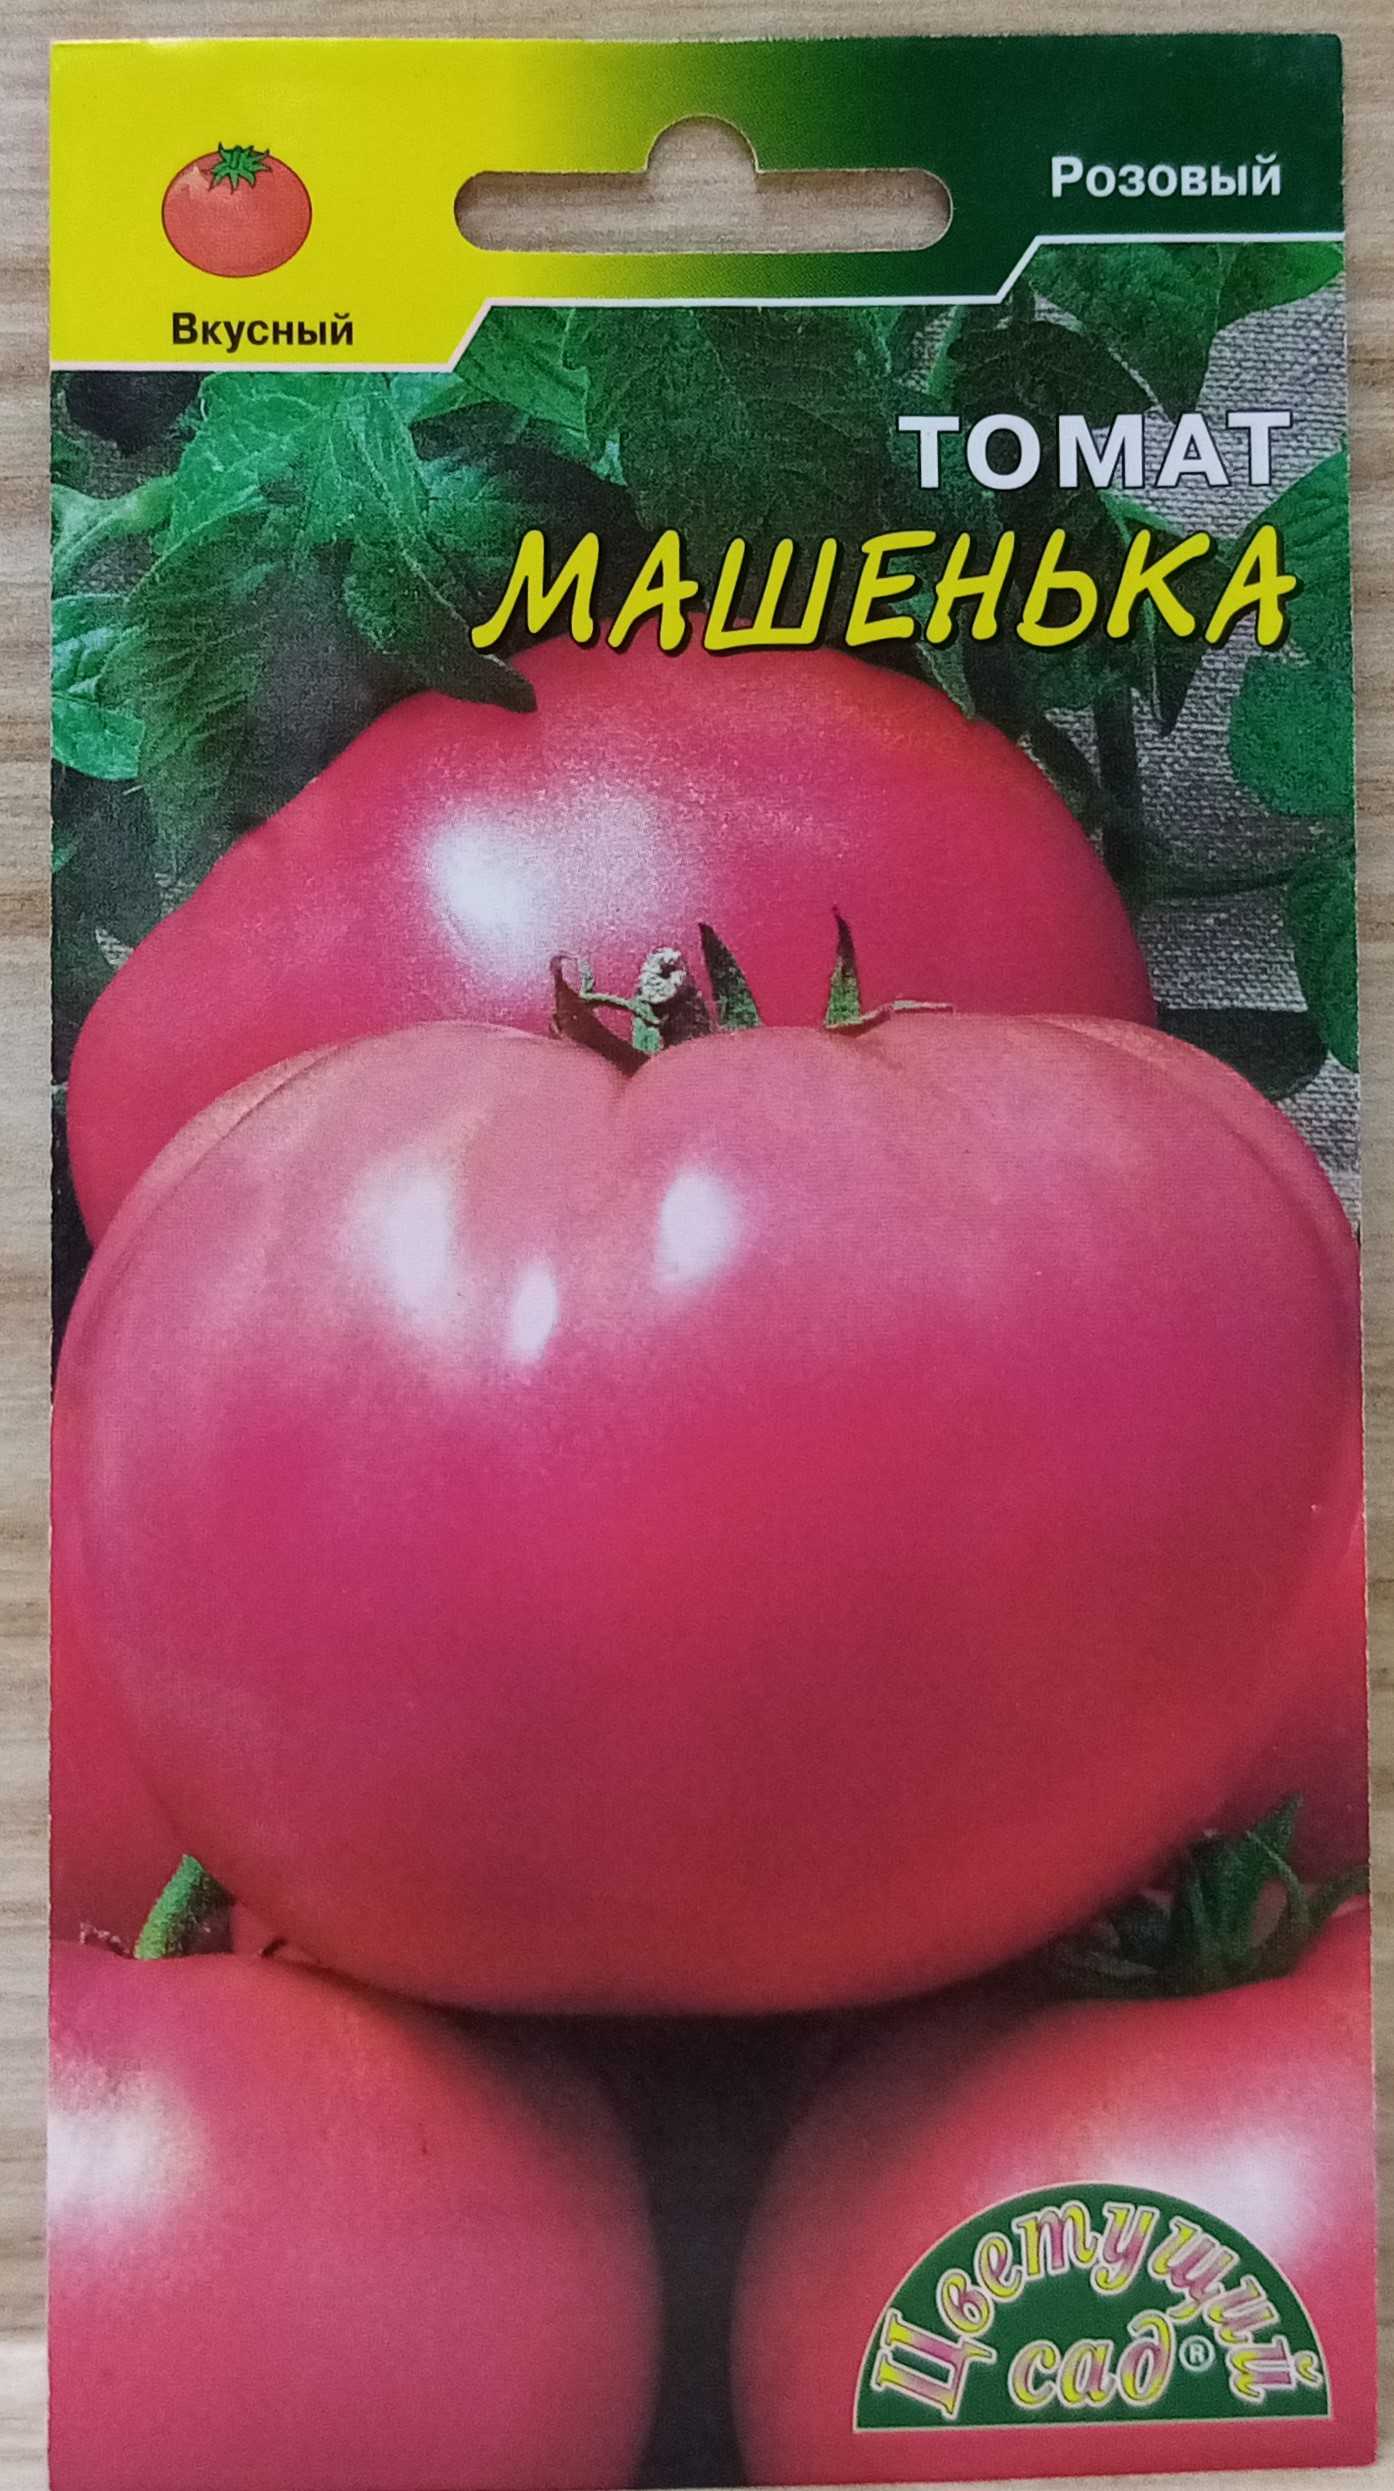 Сорт Машенька f1 помидор